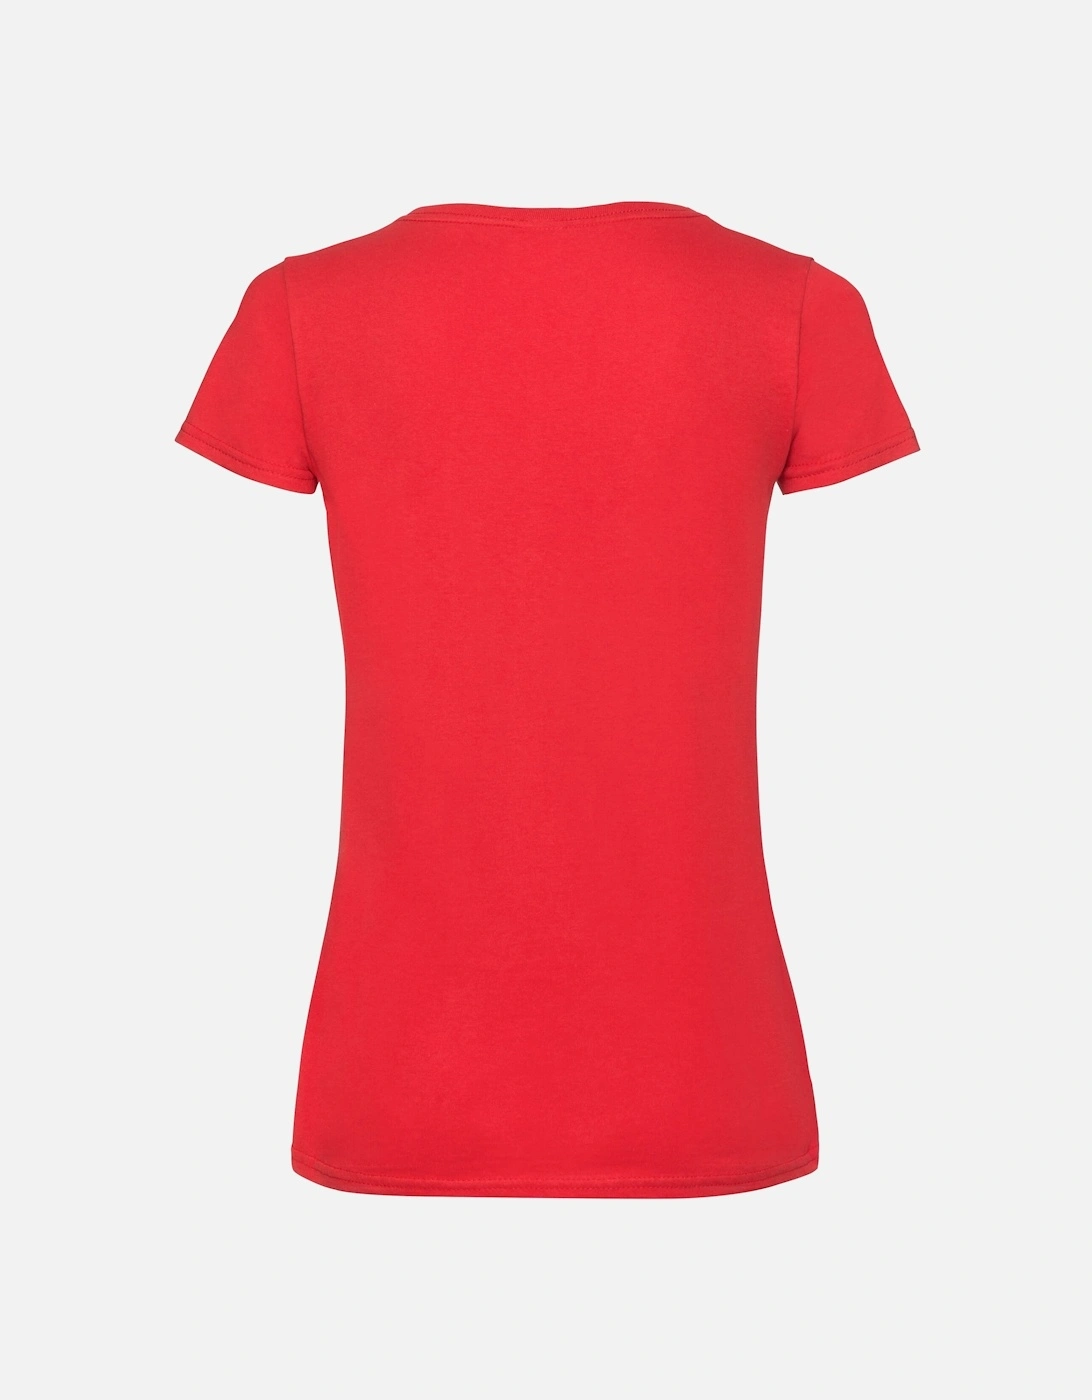 Womens/Ladies V Neck Lady Fit T-Shirt